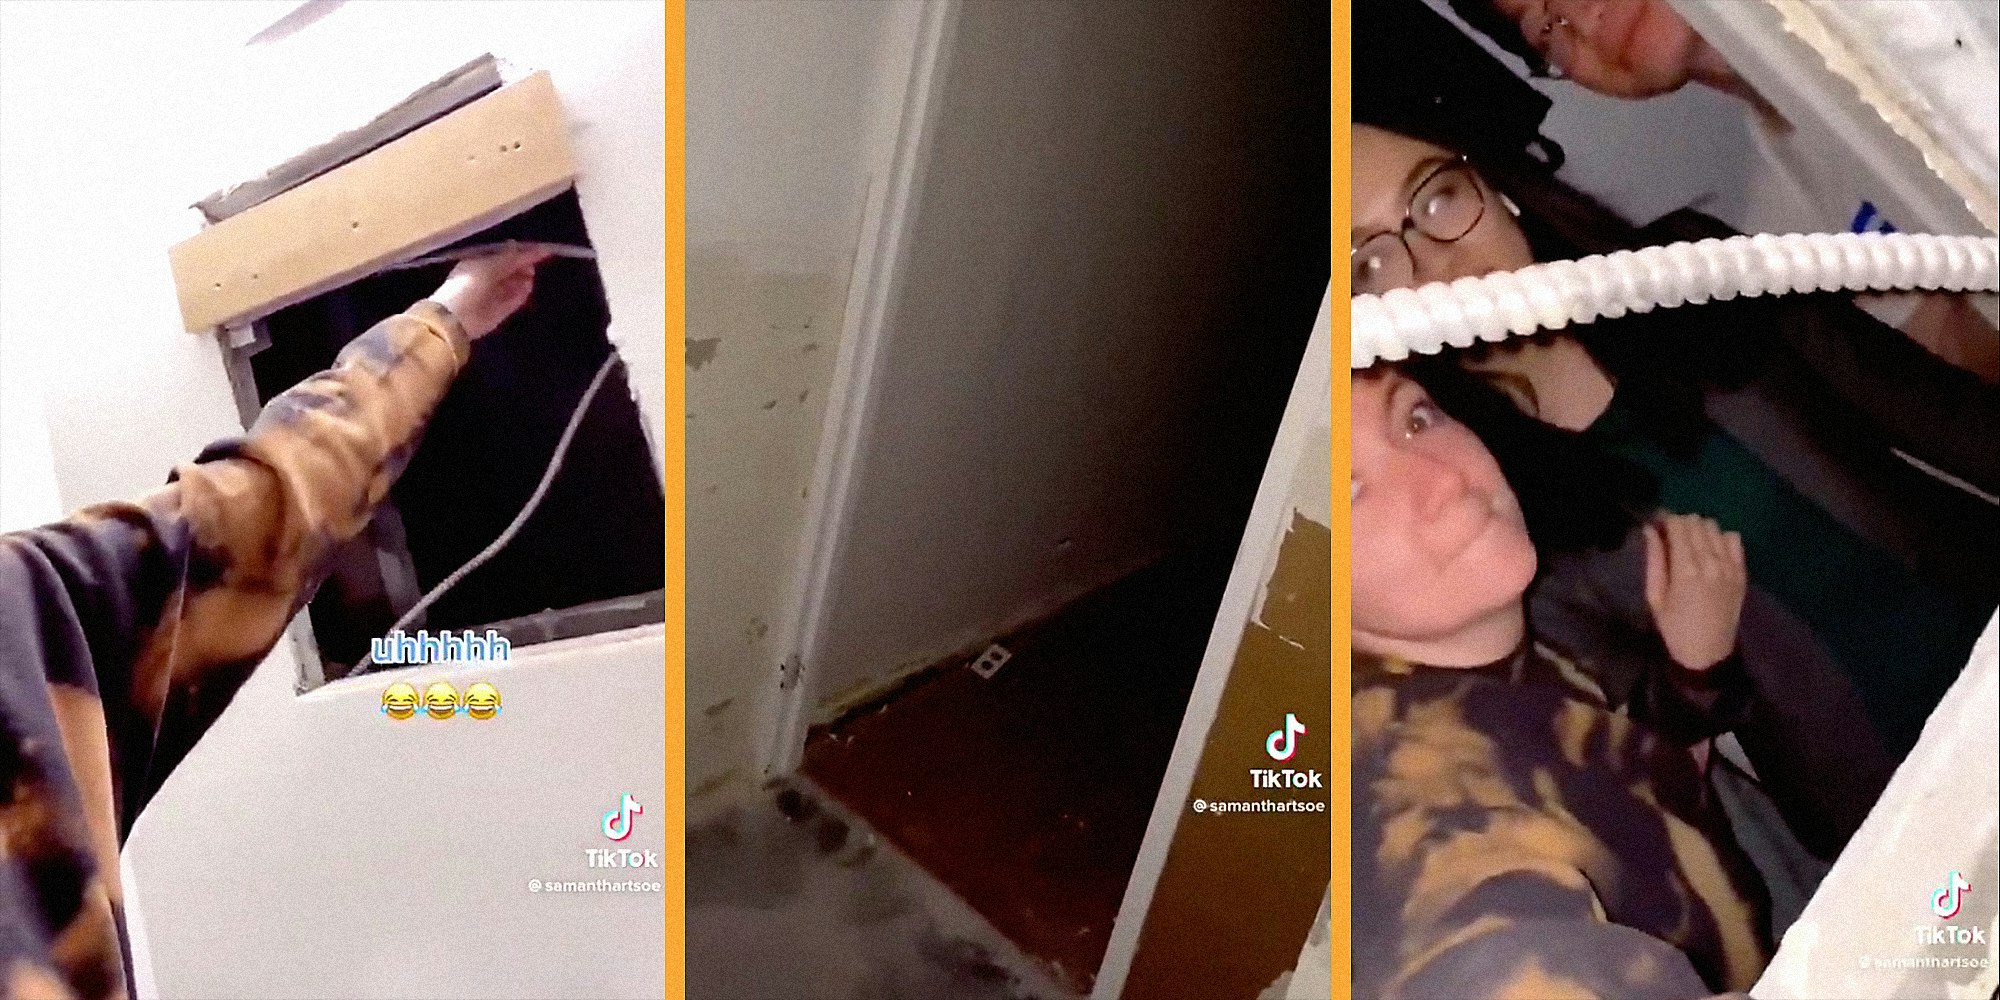 Three screenshots of roommates discovering a room behind a bathroom mirror.